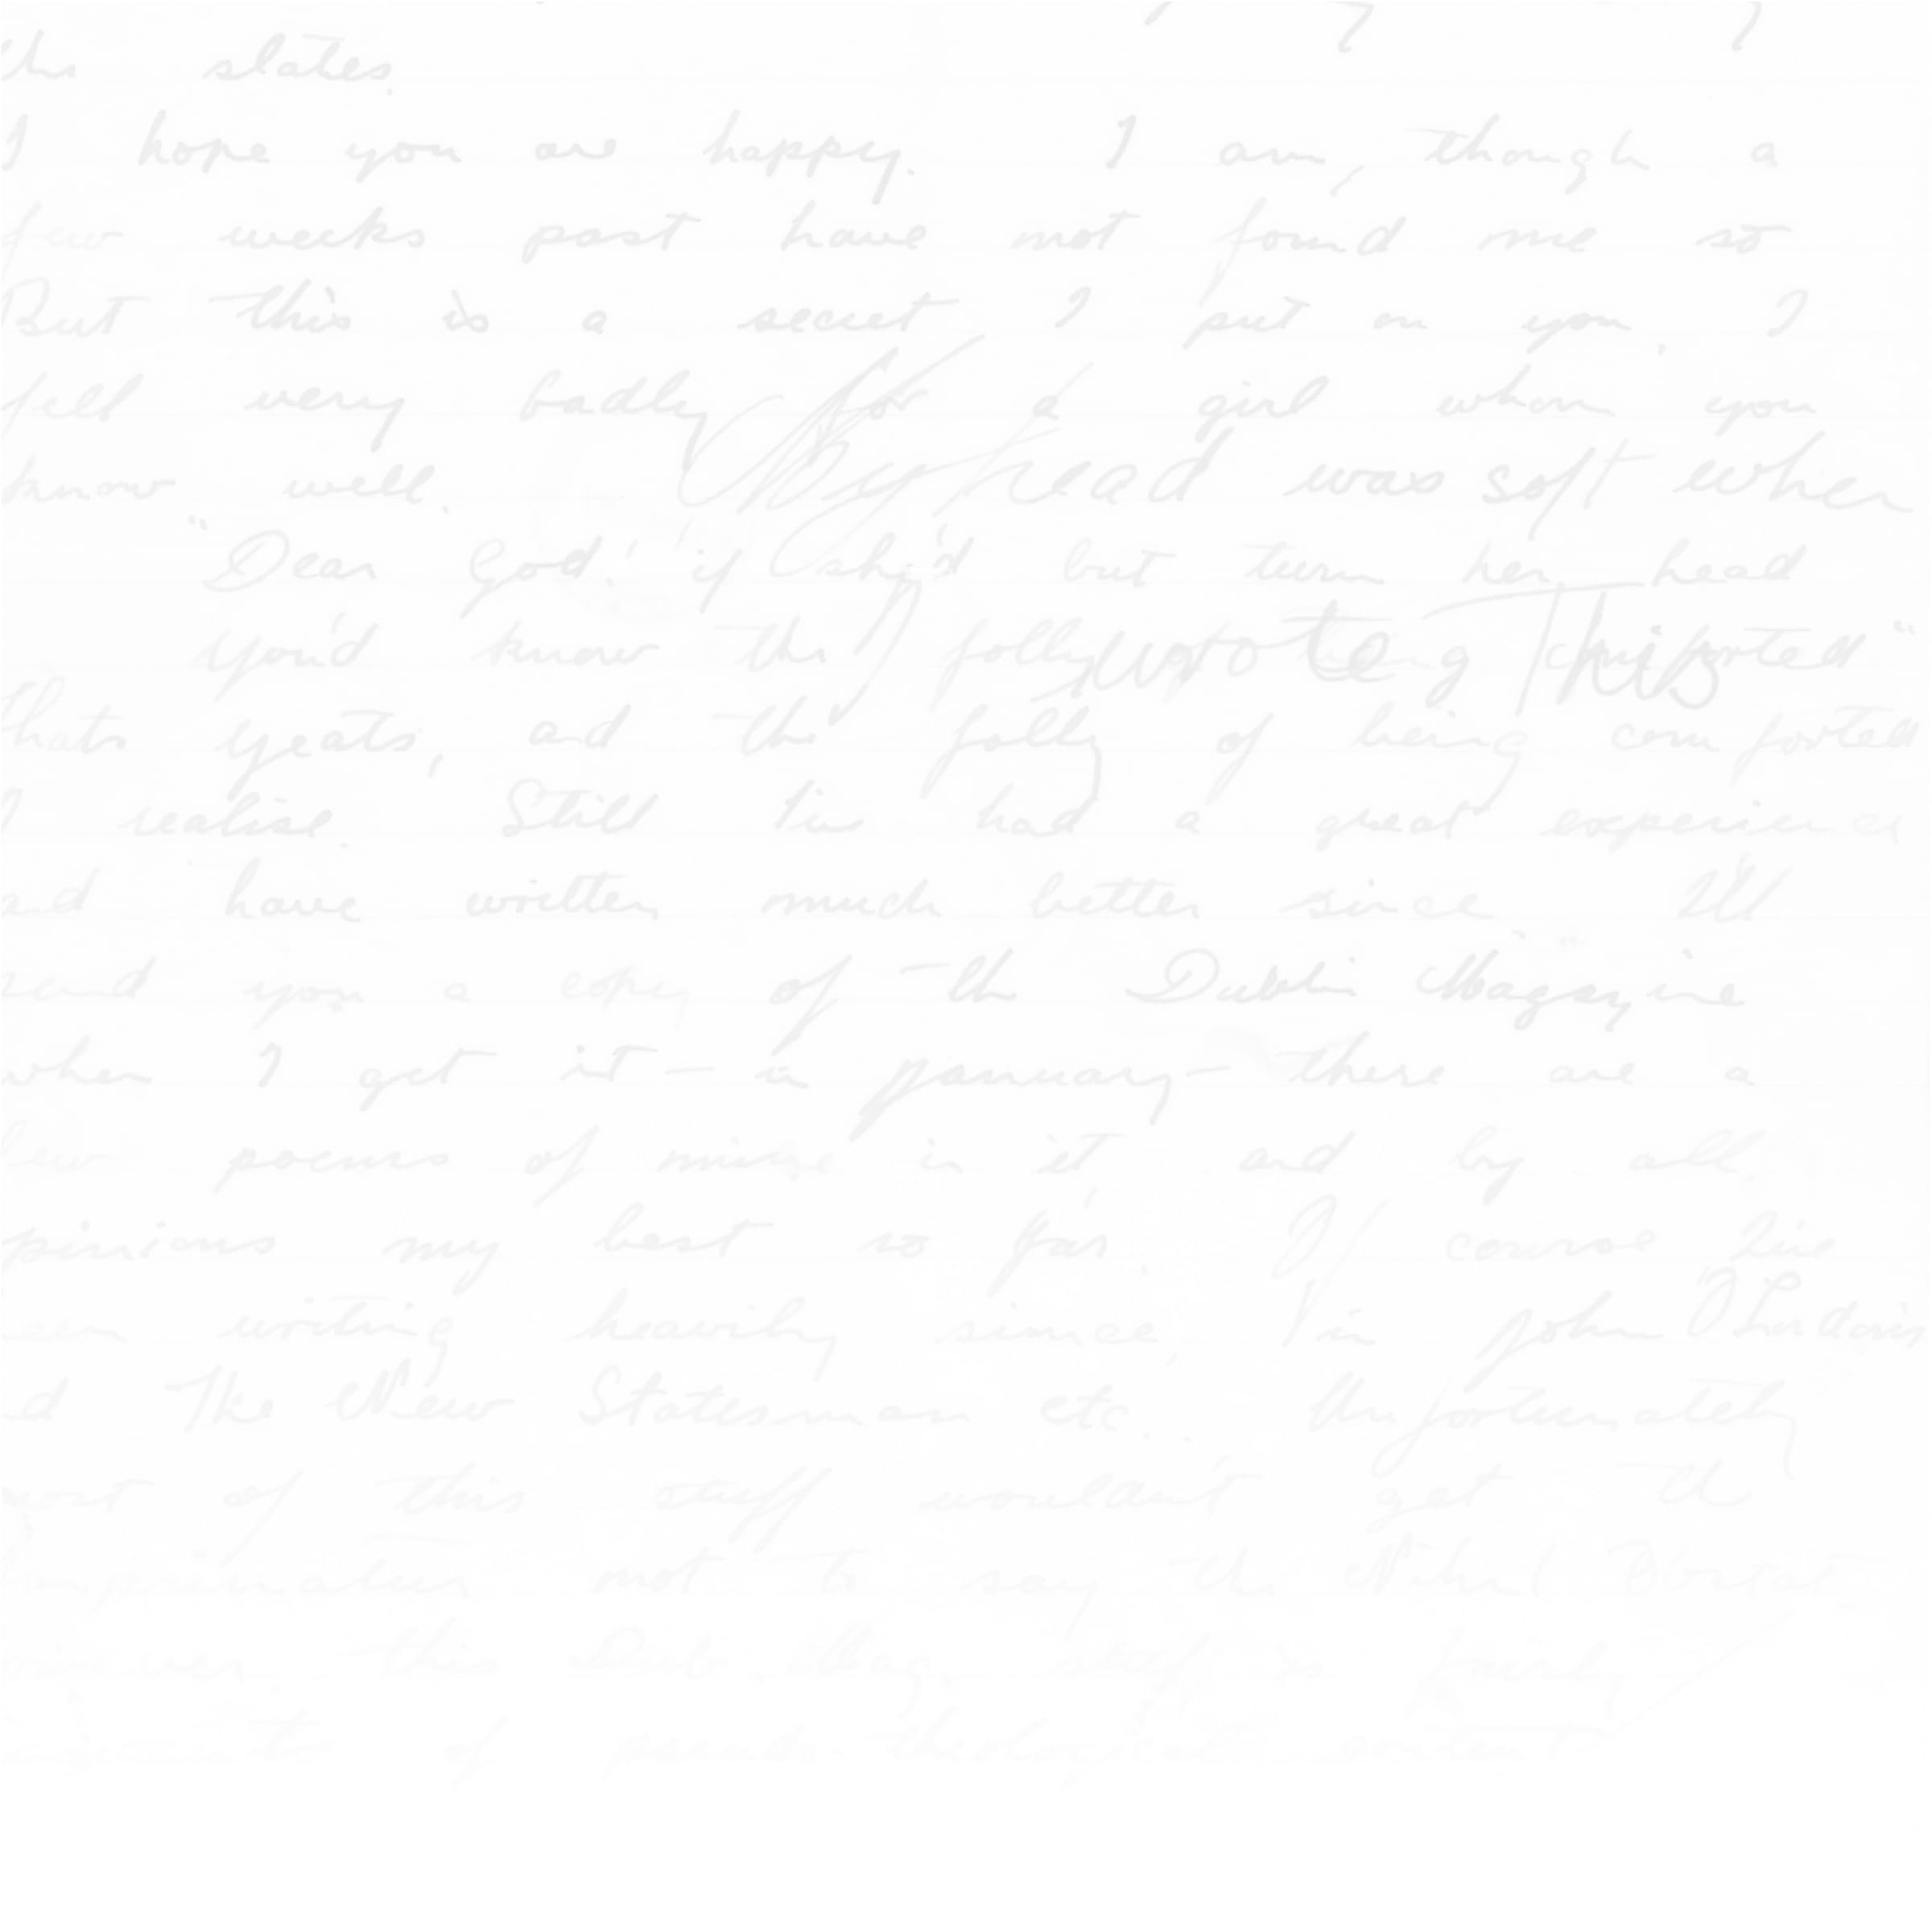 kavanagh-bg-handwritten_web-1669994522.jpg